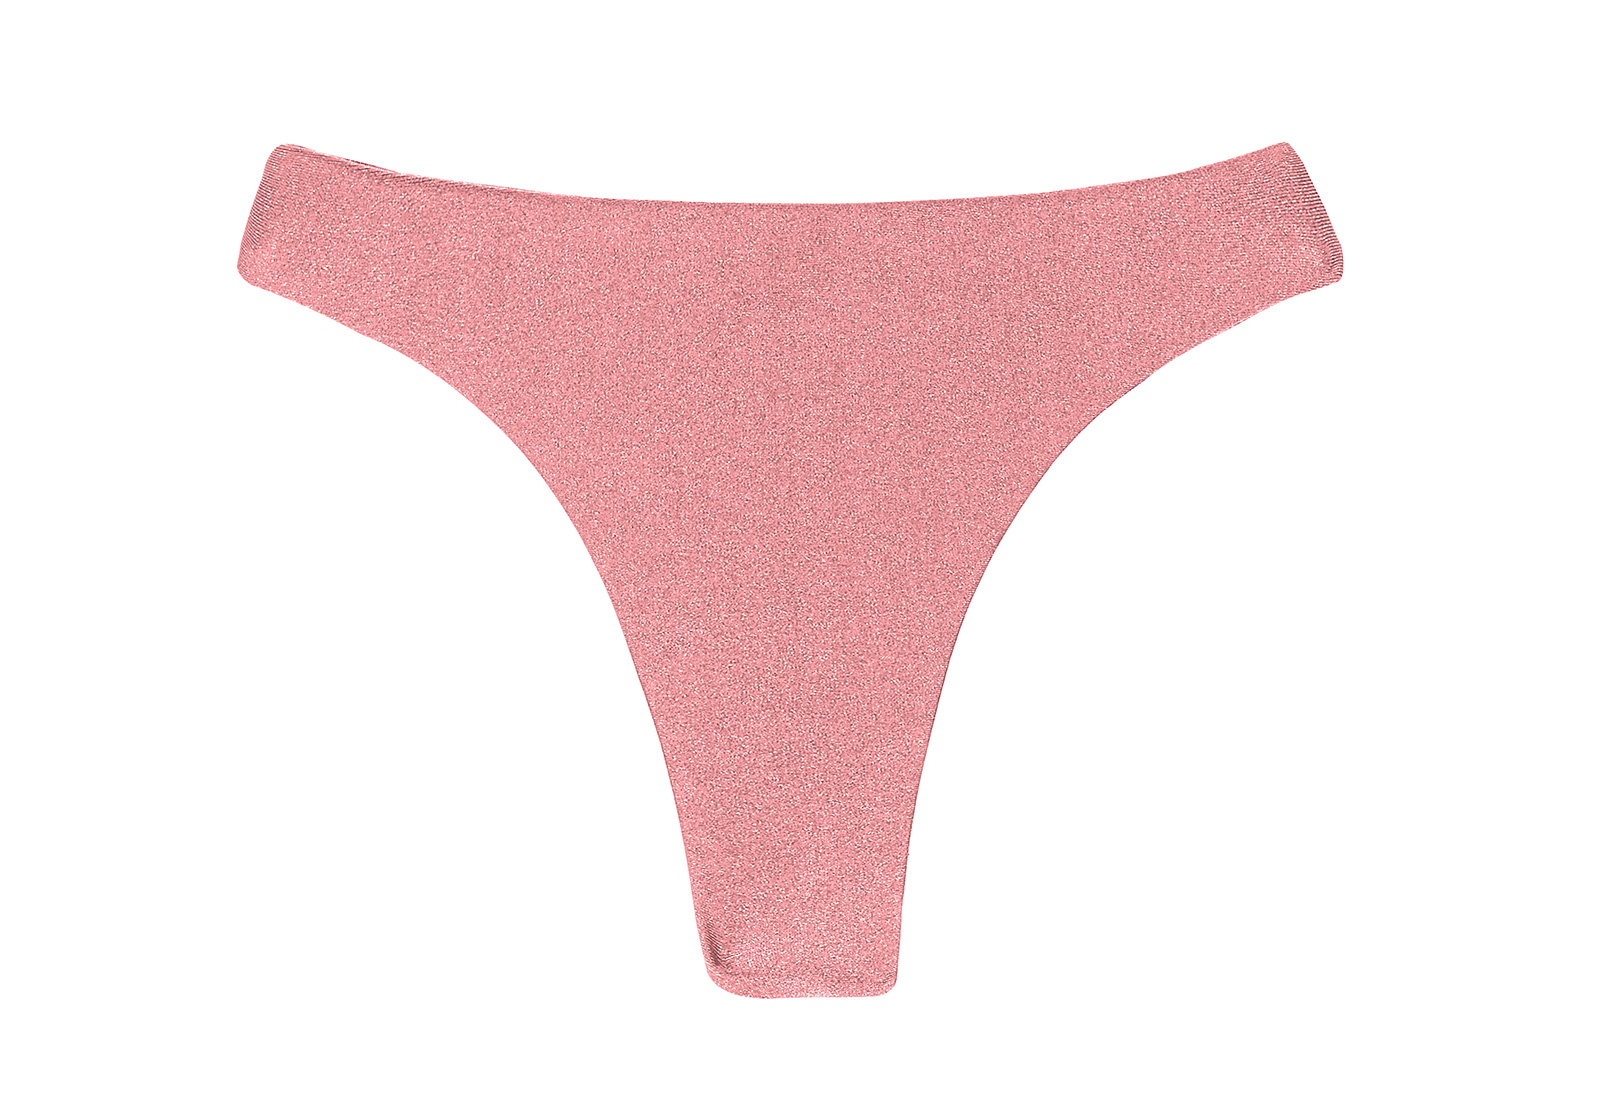 Bikini Bottoms Iridescent Pink Thong Bikini Bottom Bottom Callas Fio 